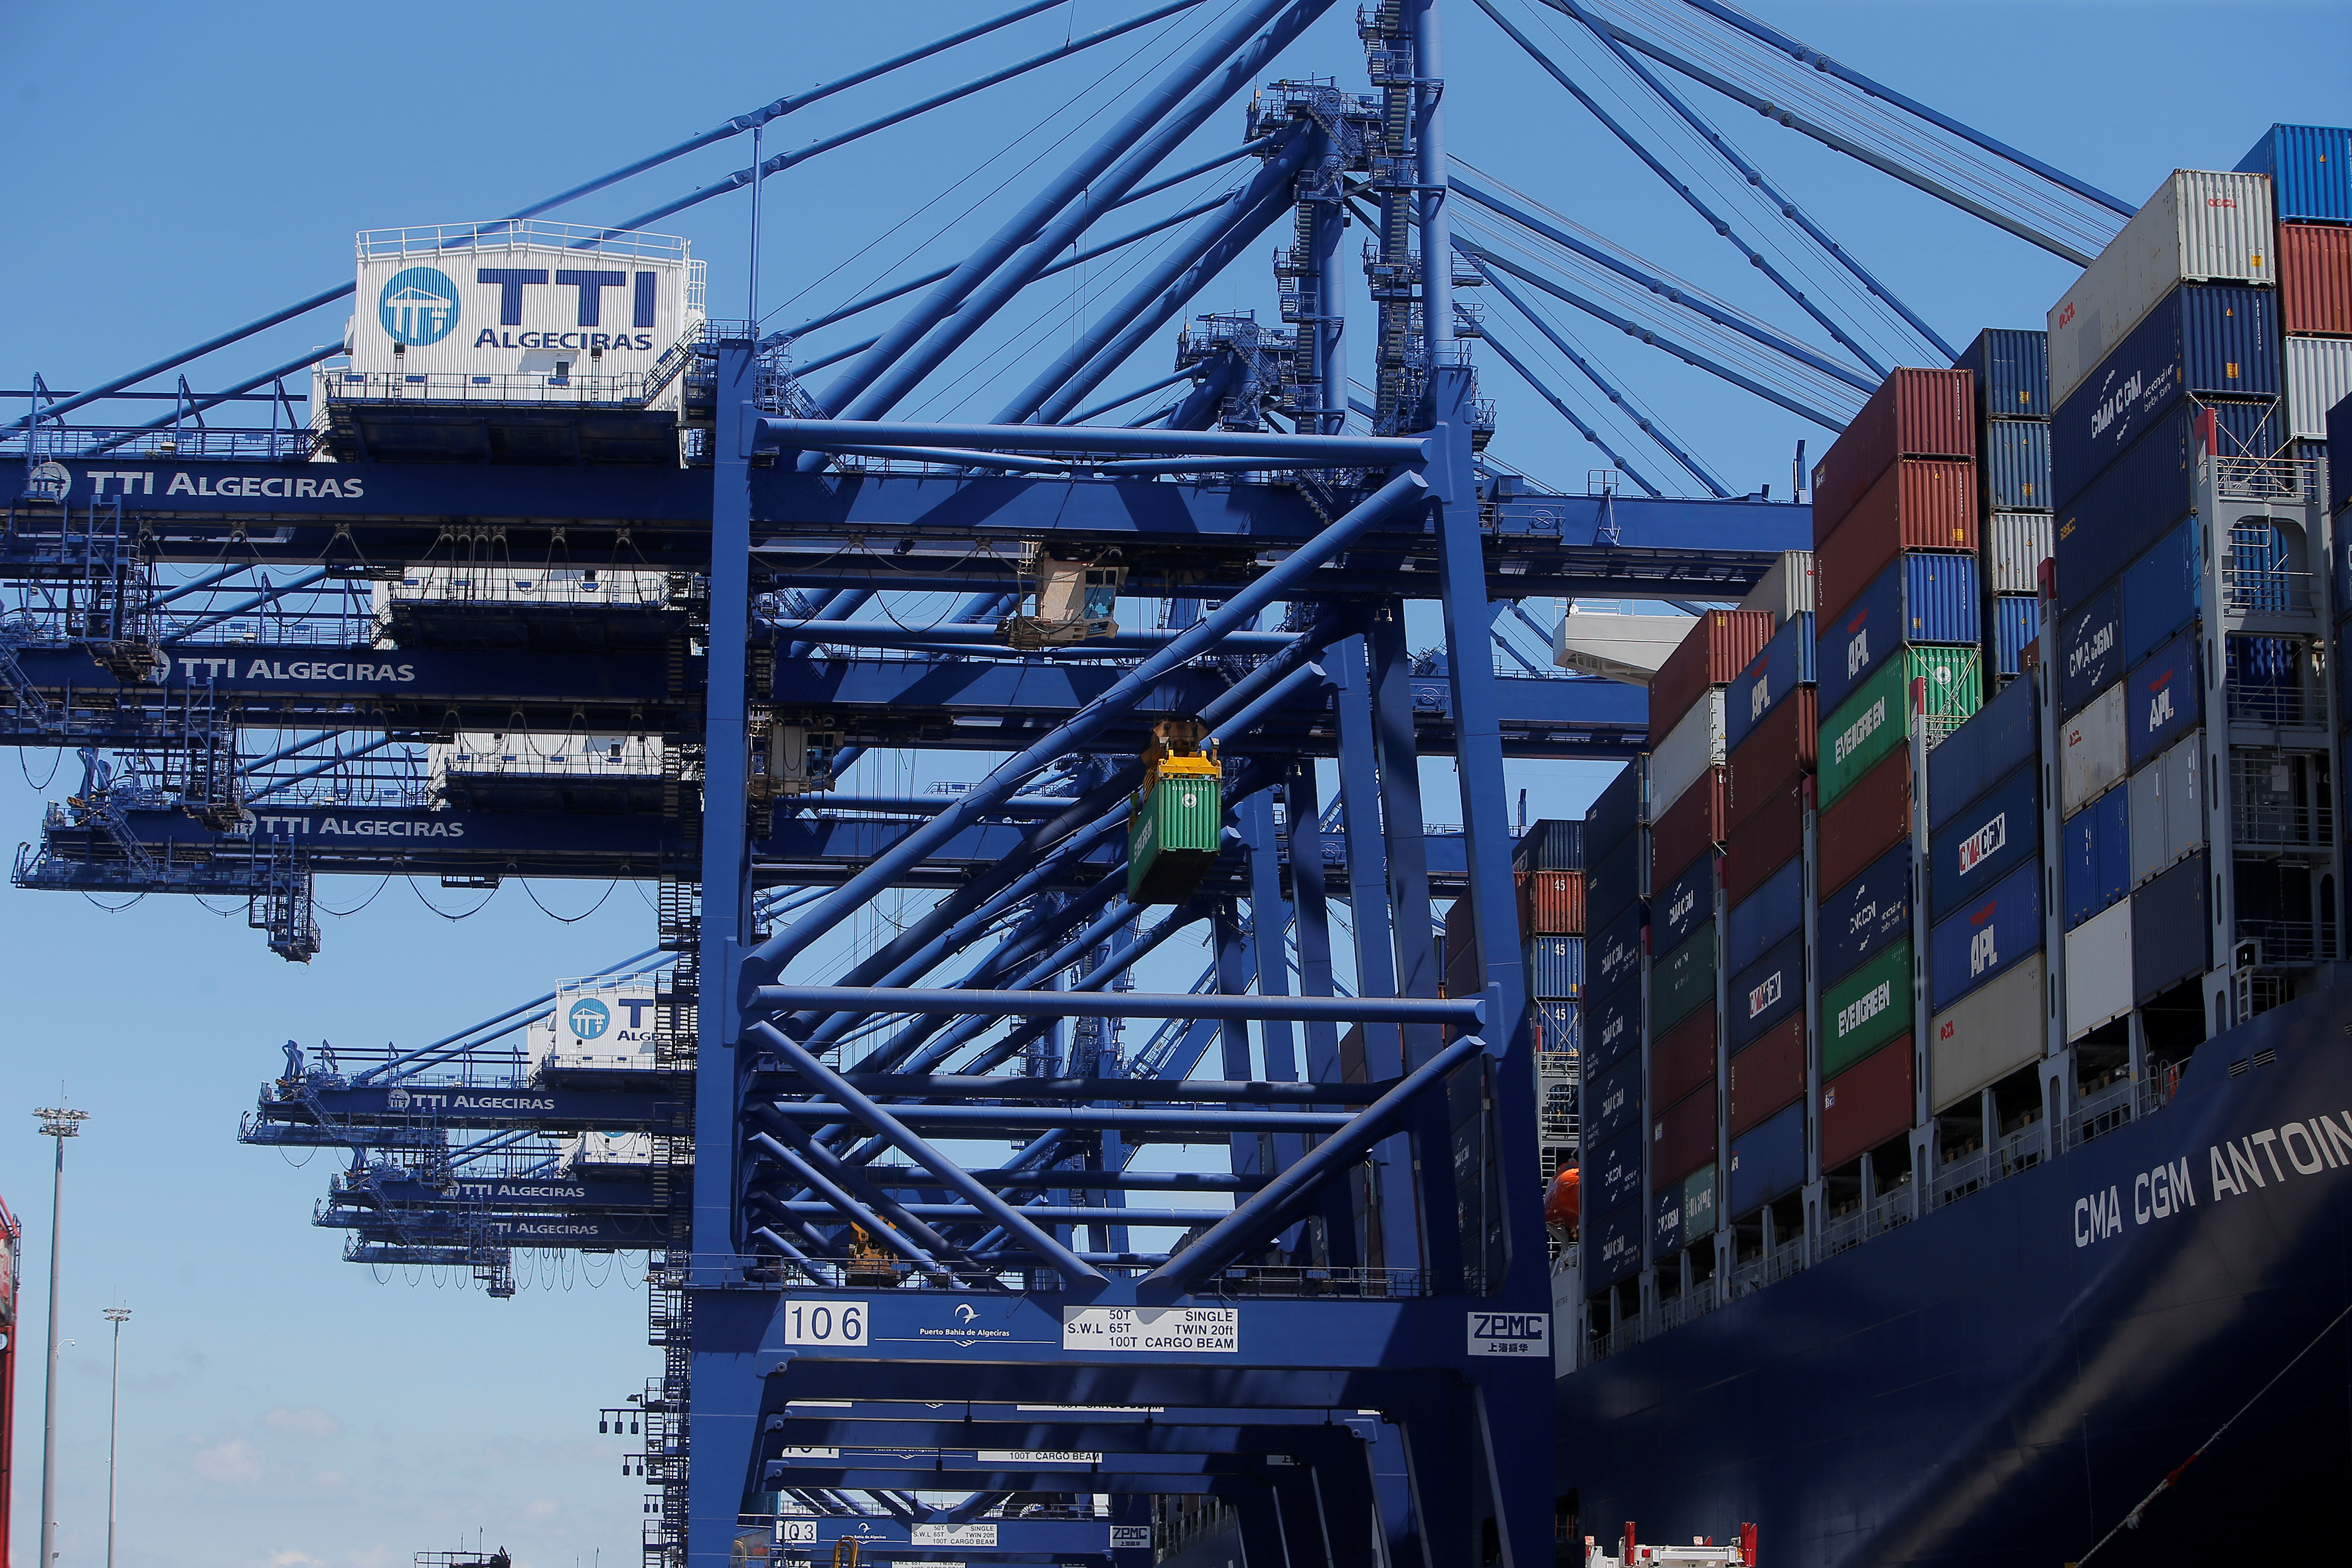 A crane loads a container on the mega cargo ship "Antoine de Saint Exupery" at the Total Terminal International Algeciras before leaving the port of Algeciras